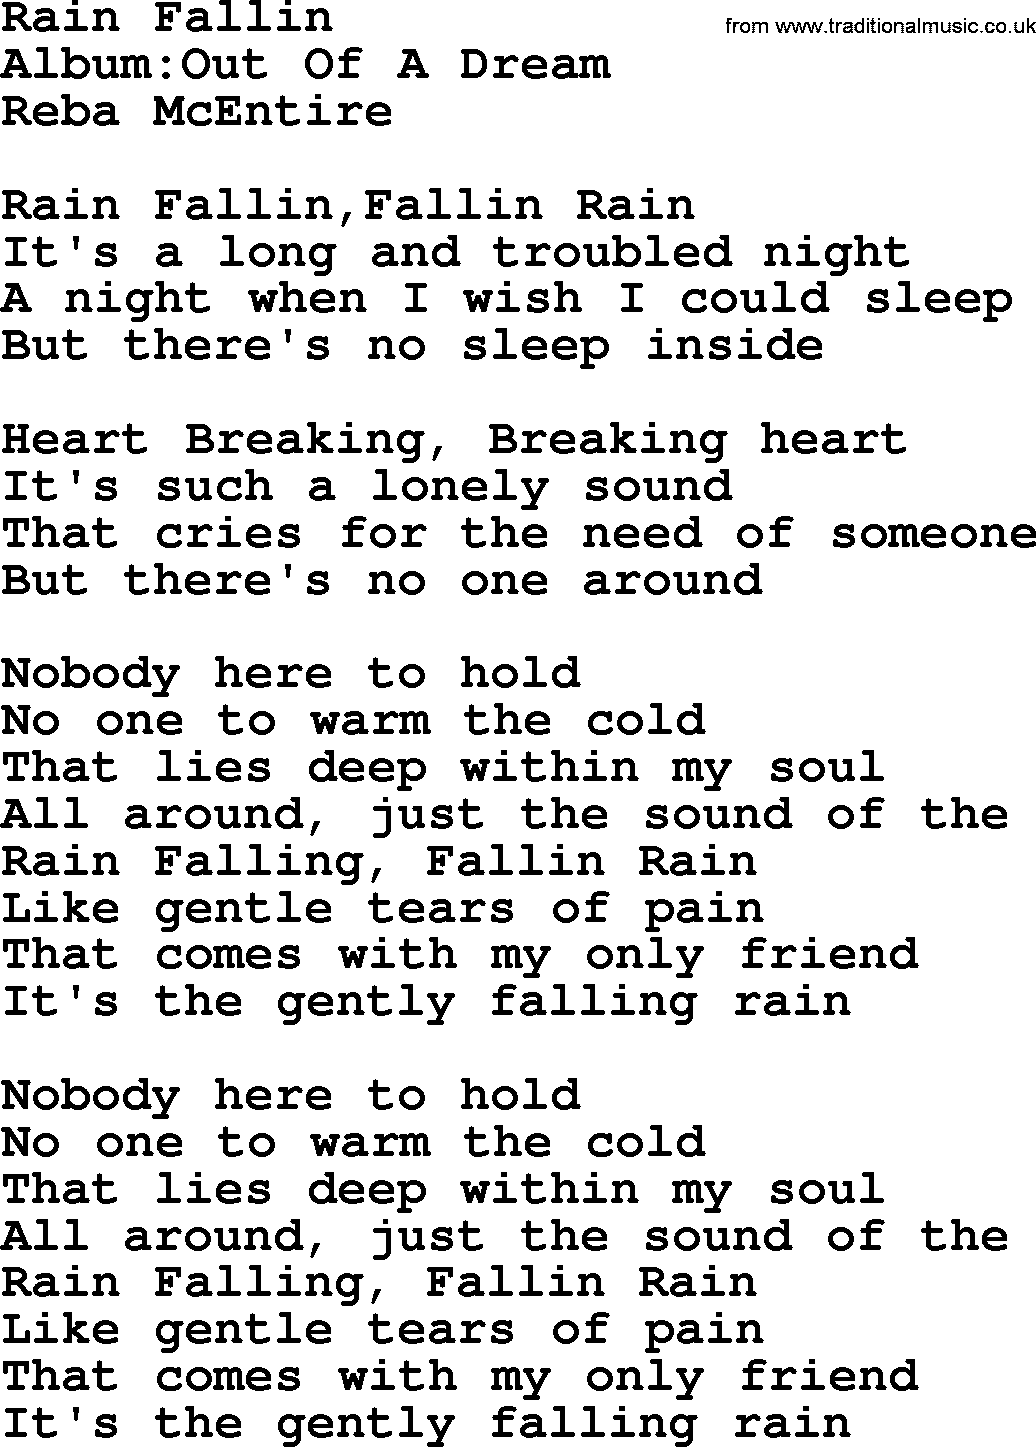 Reba McEntire song: Rain Fallin lyrics